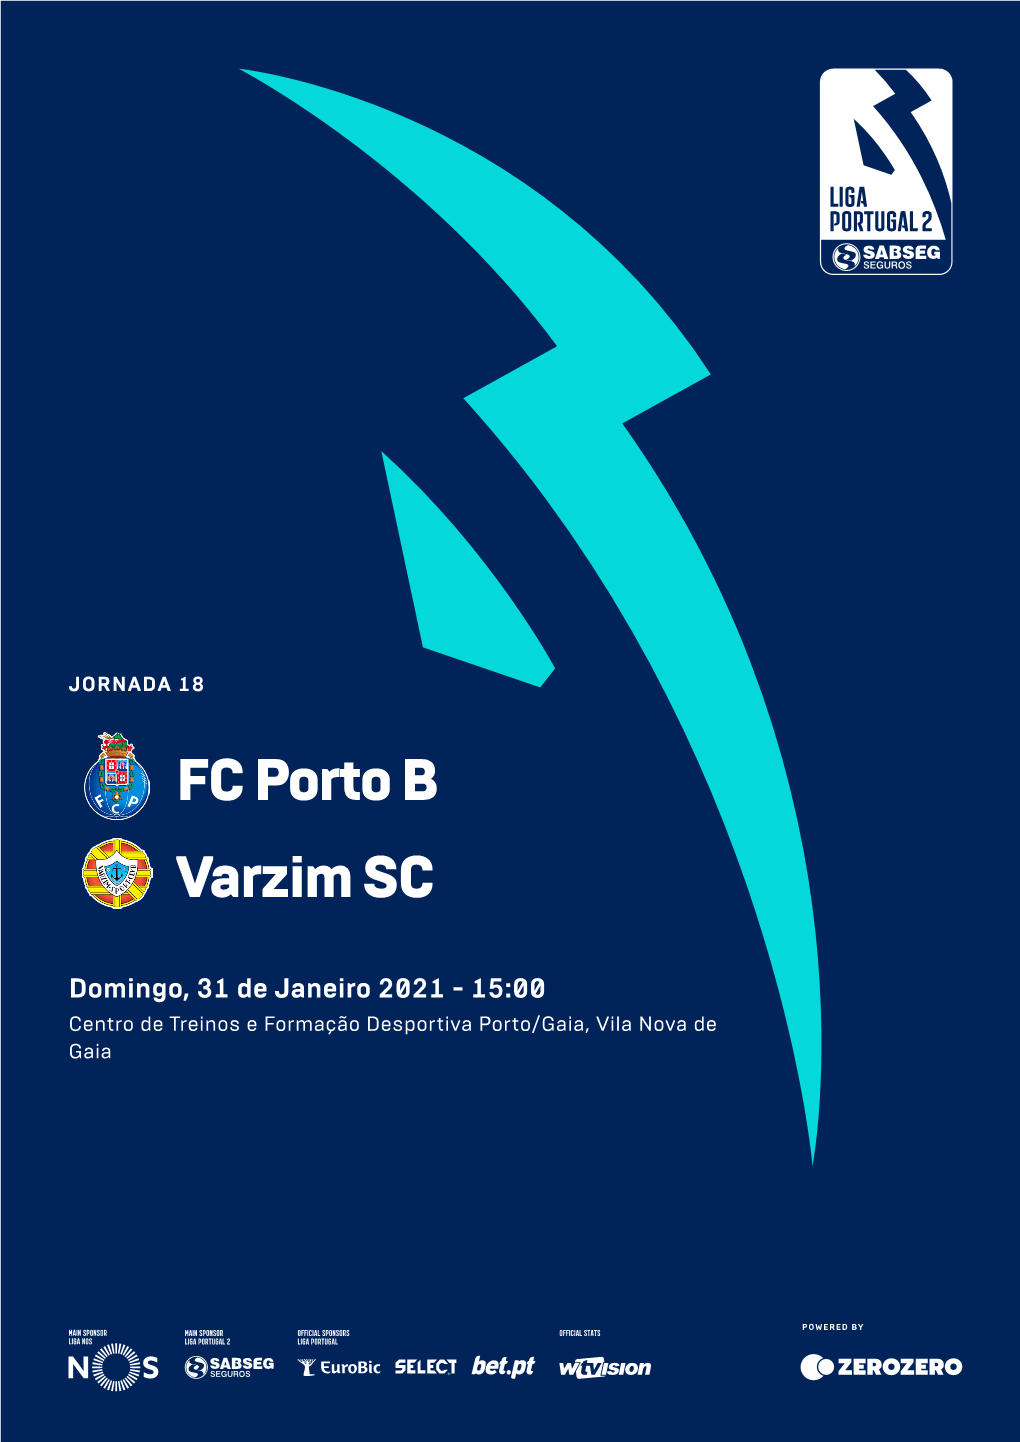 FC Porto B Varzim SC